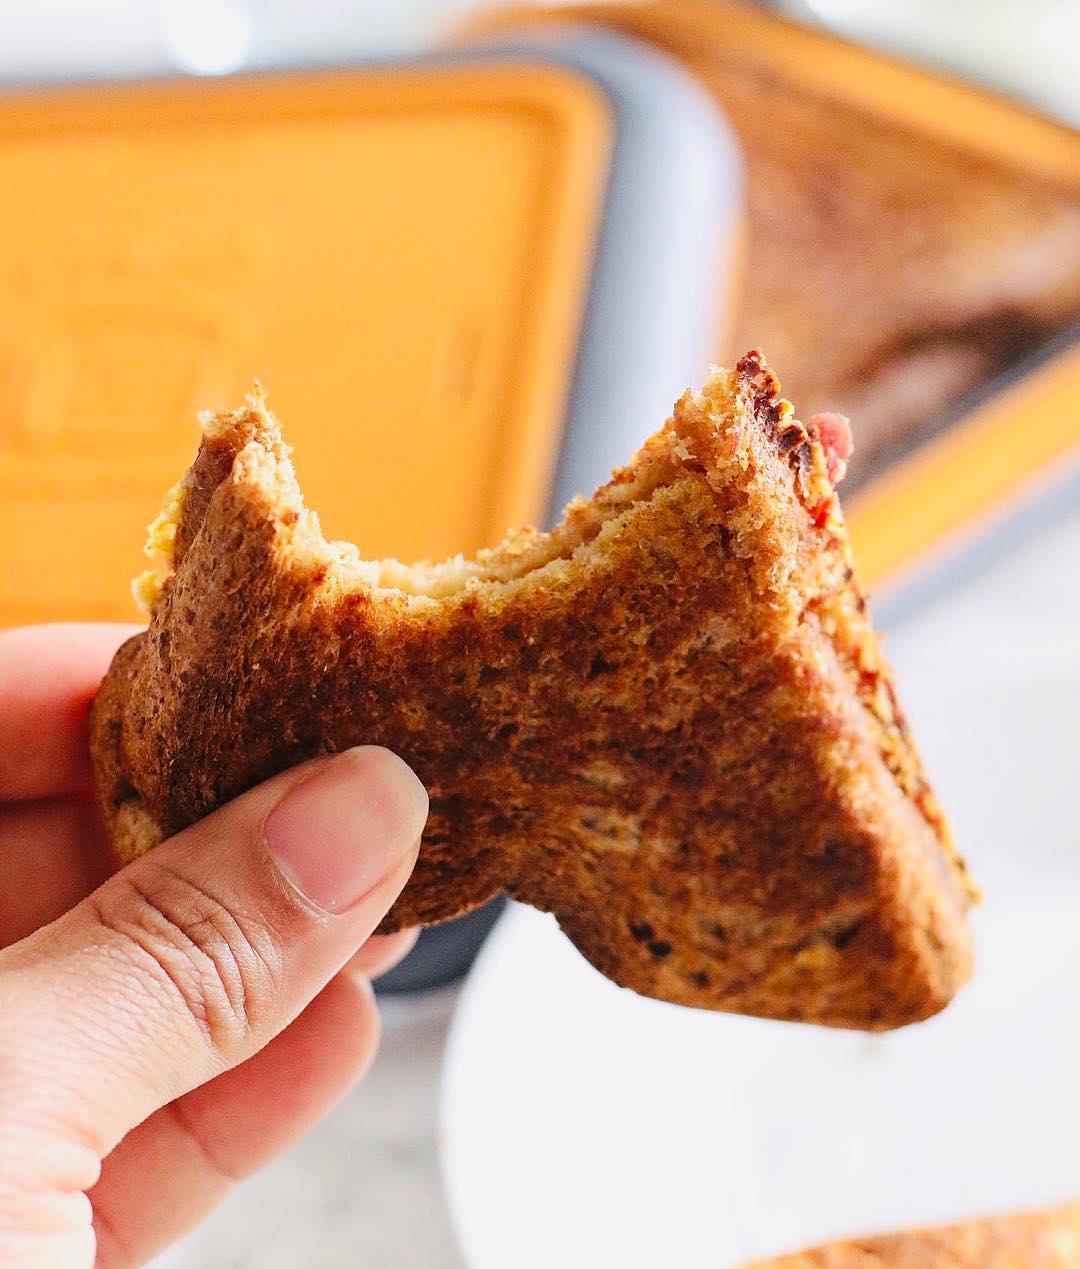 MICO Toastie Toasted Sandwich Maker Microwavable